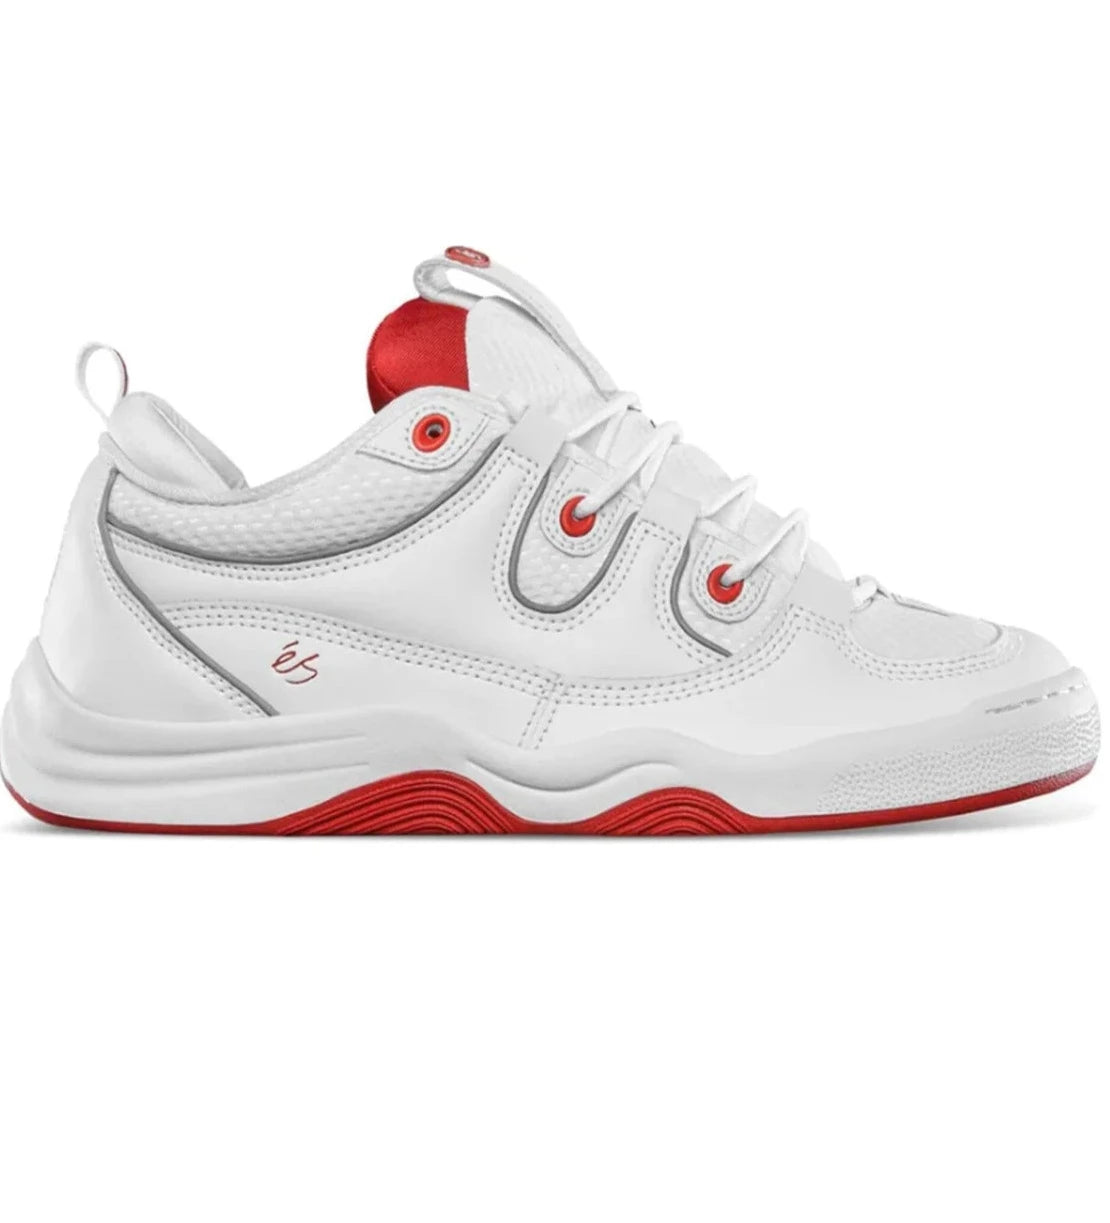 eS Two Nine 8 Shoe, White Red